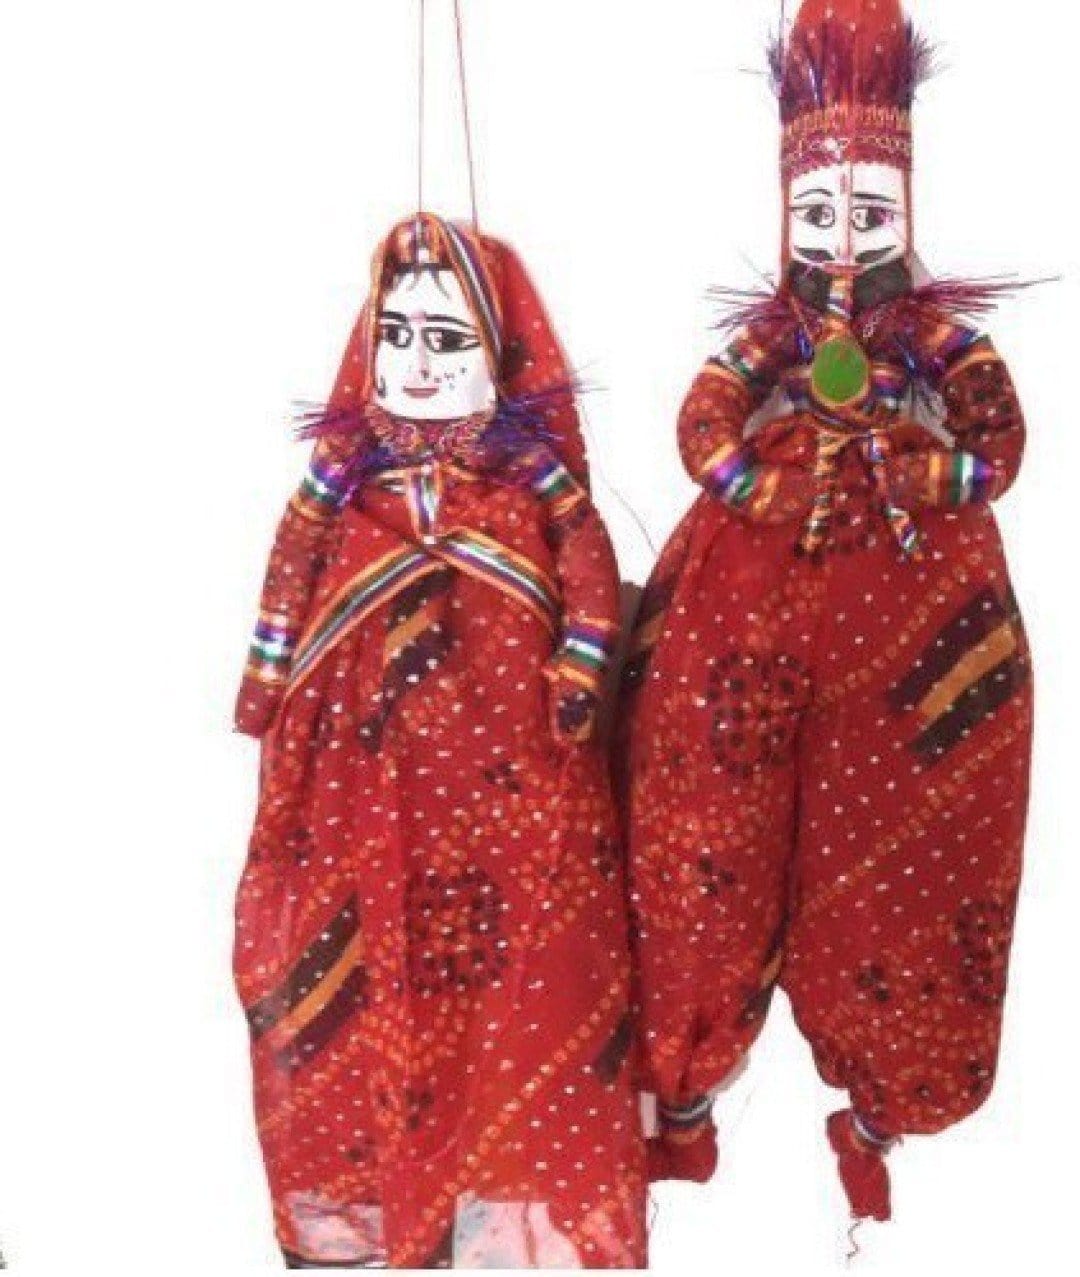 LAMANSH Kathputl/Puppet Multicolor / Wood / Standard Lamansh® Rajasthani Handcrafted Handmade Kathputl/Puppet for Home Décor / Wood Folk Puppets, Standard, 1 Male and 1 Female Puppet